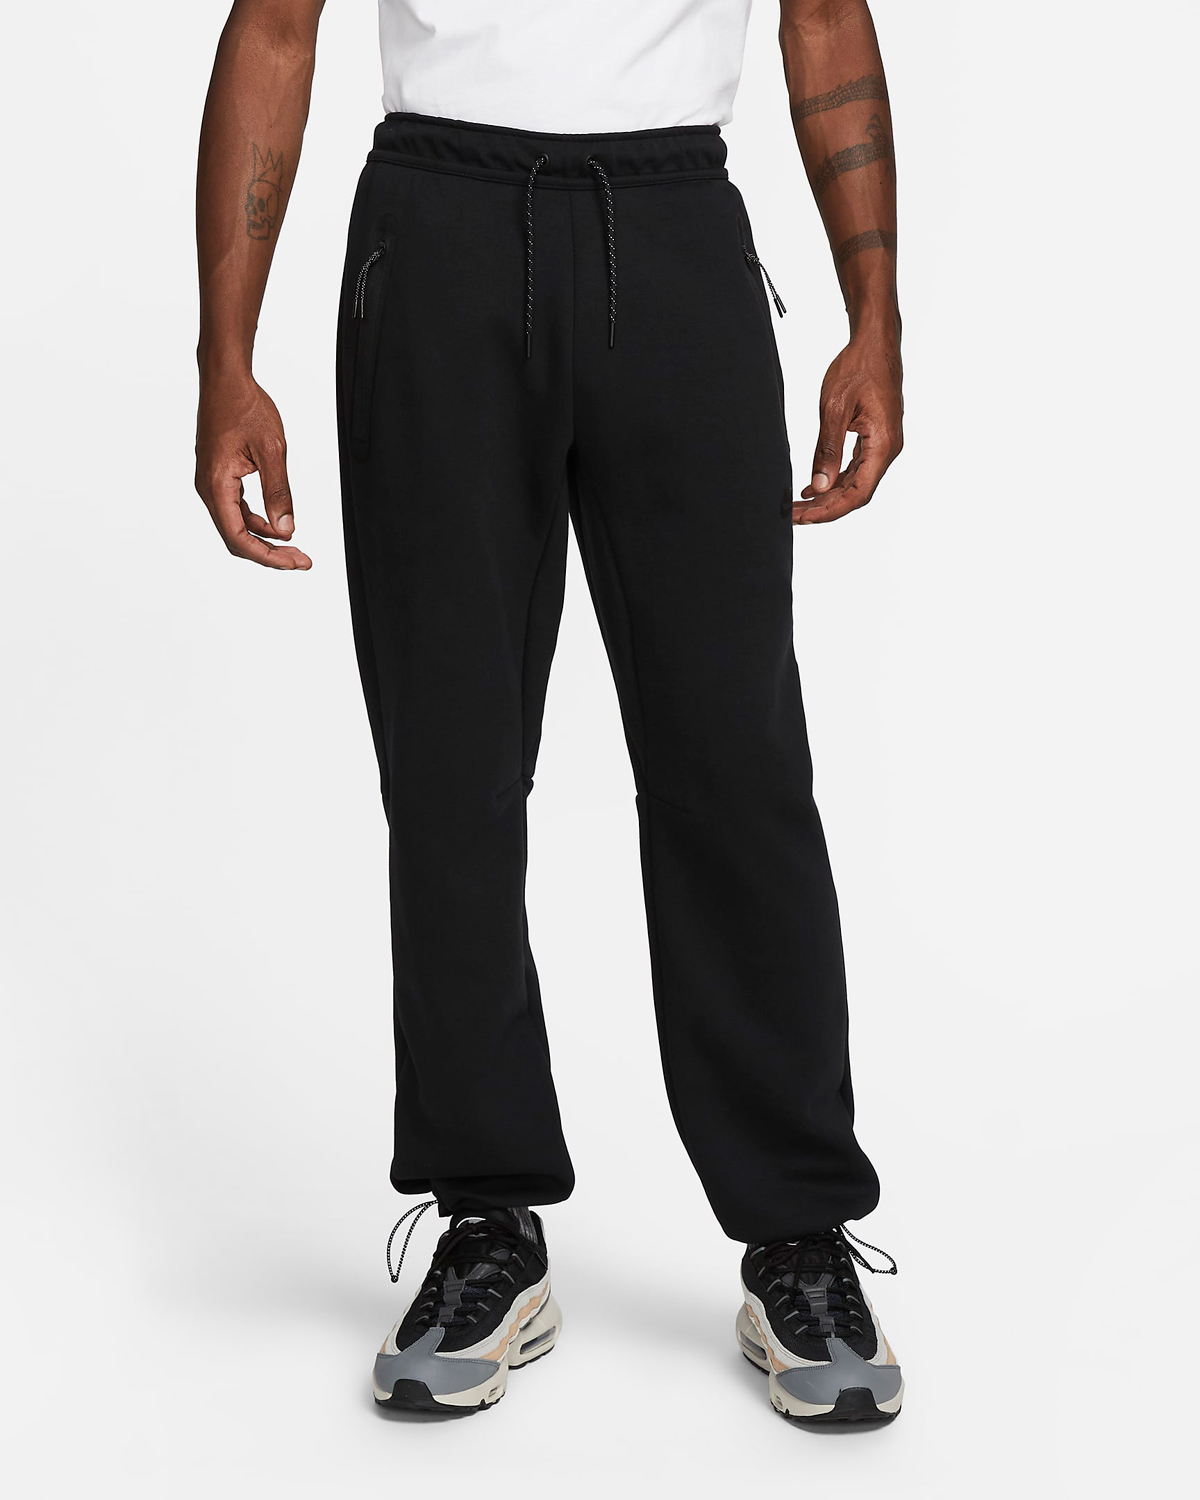 Nike-Tech-Fleece-Pants-Black